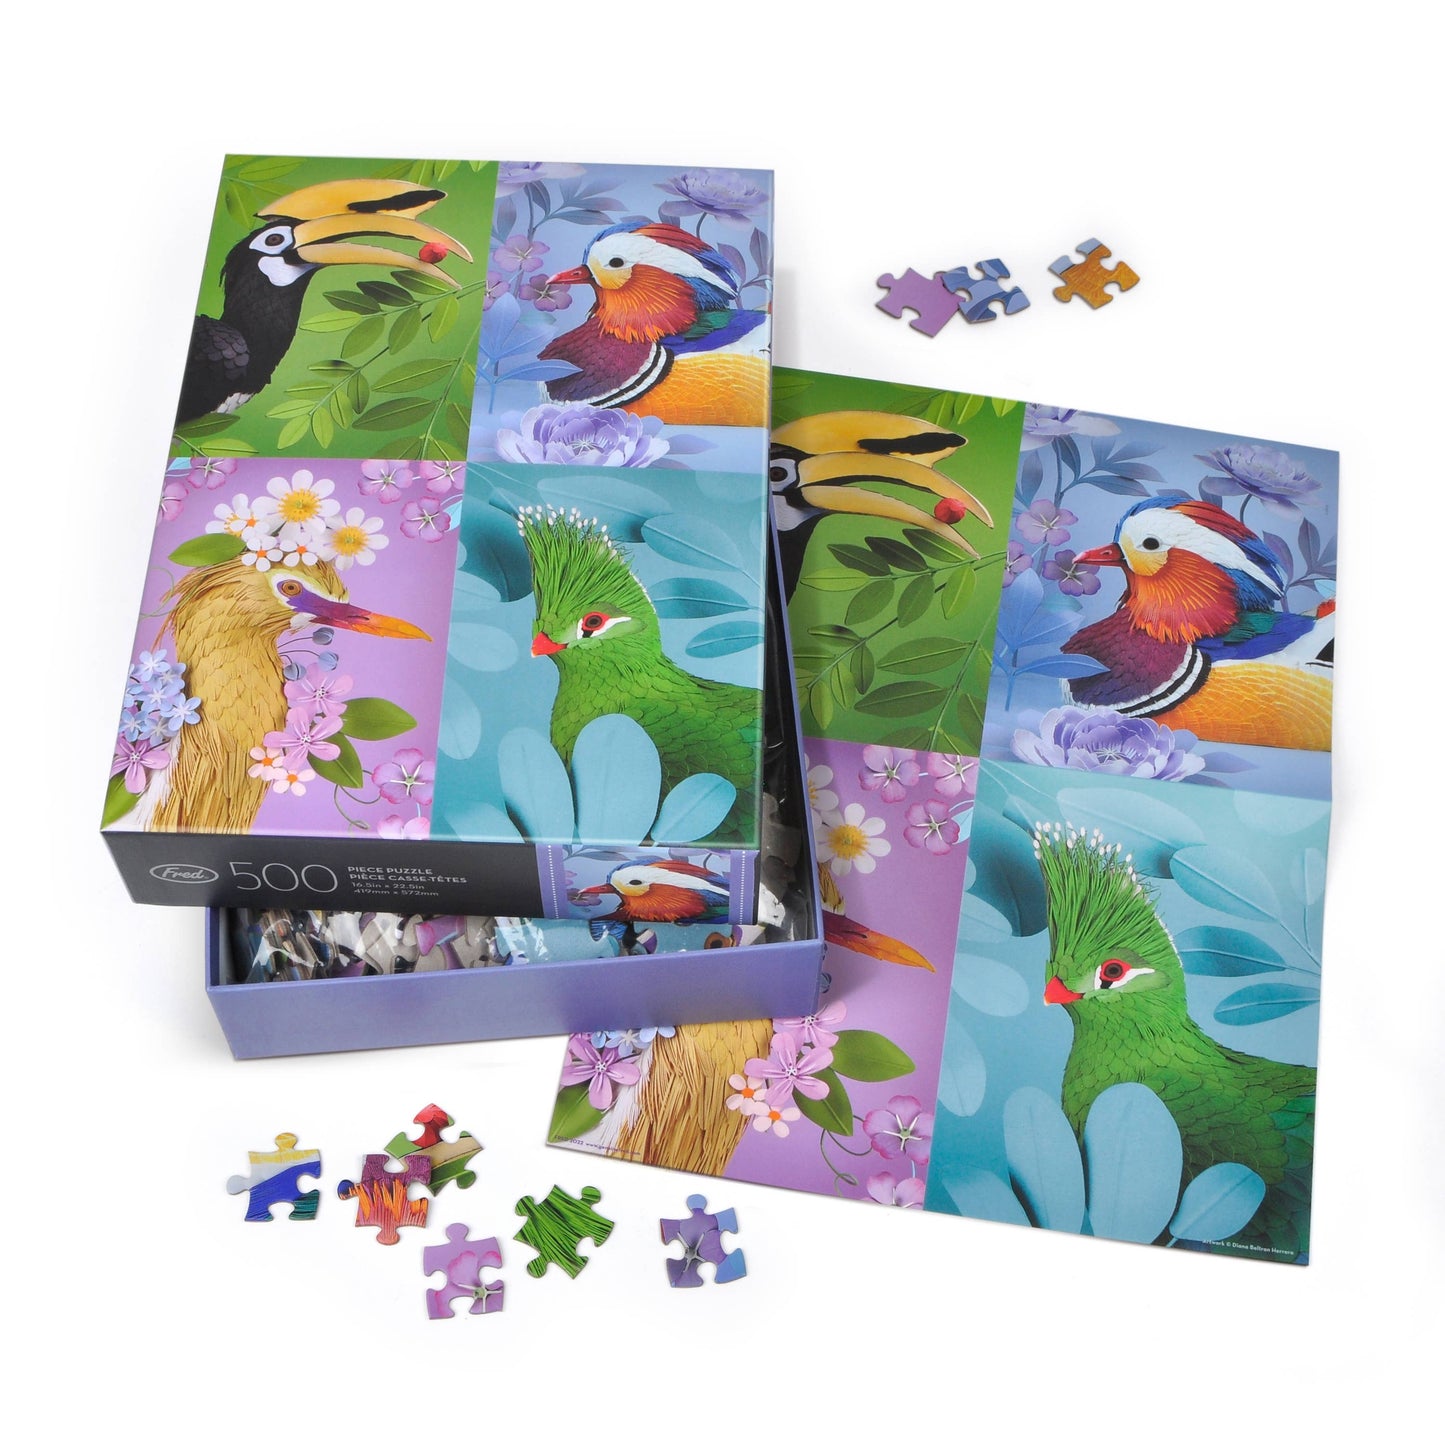 Fred & Friends - Puzzle 500 PC- Diana Beltran Herrera- Wonders of Nature